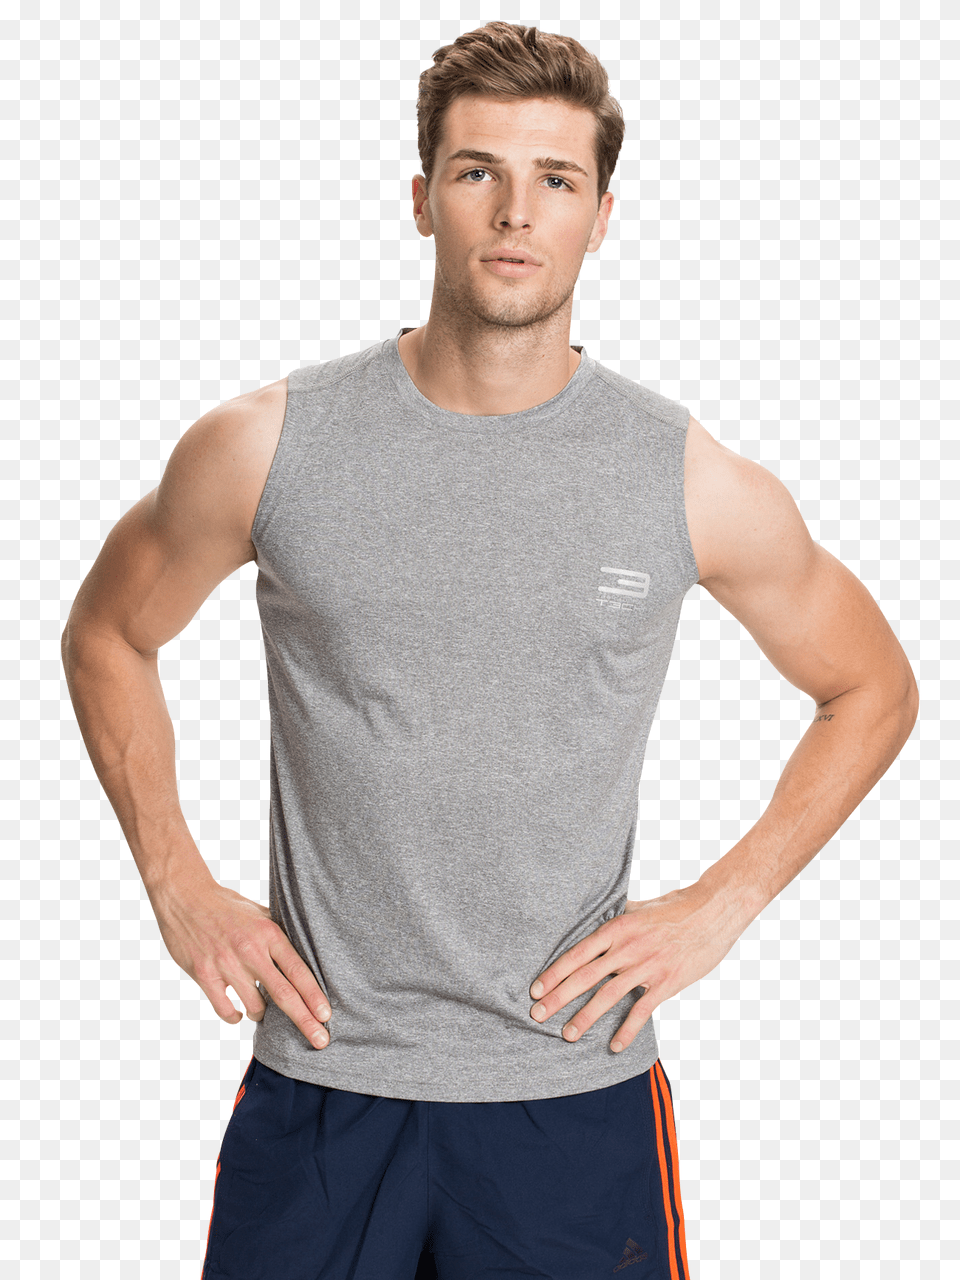 Pngpix Com Man Fitness Image, Clothing, Tank Top, Adult, Male Free Transparent Png